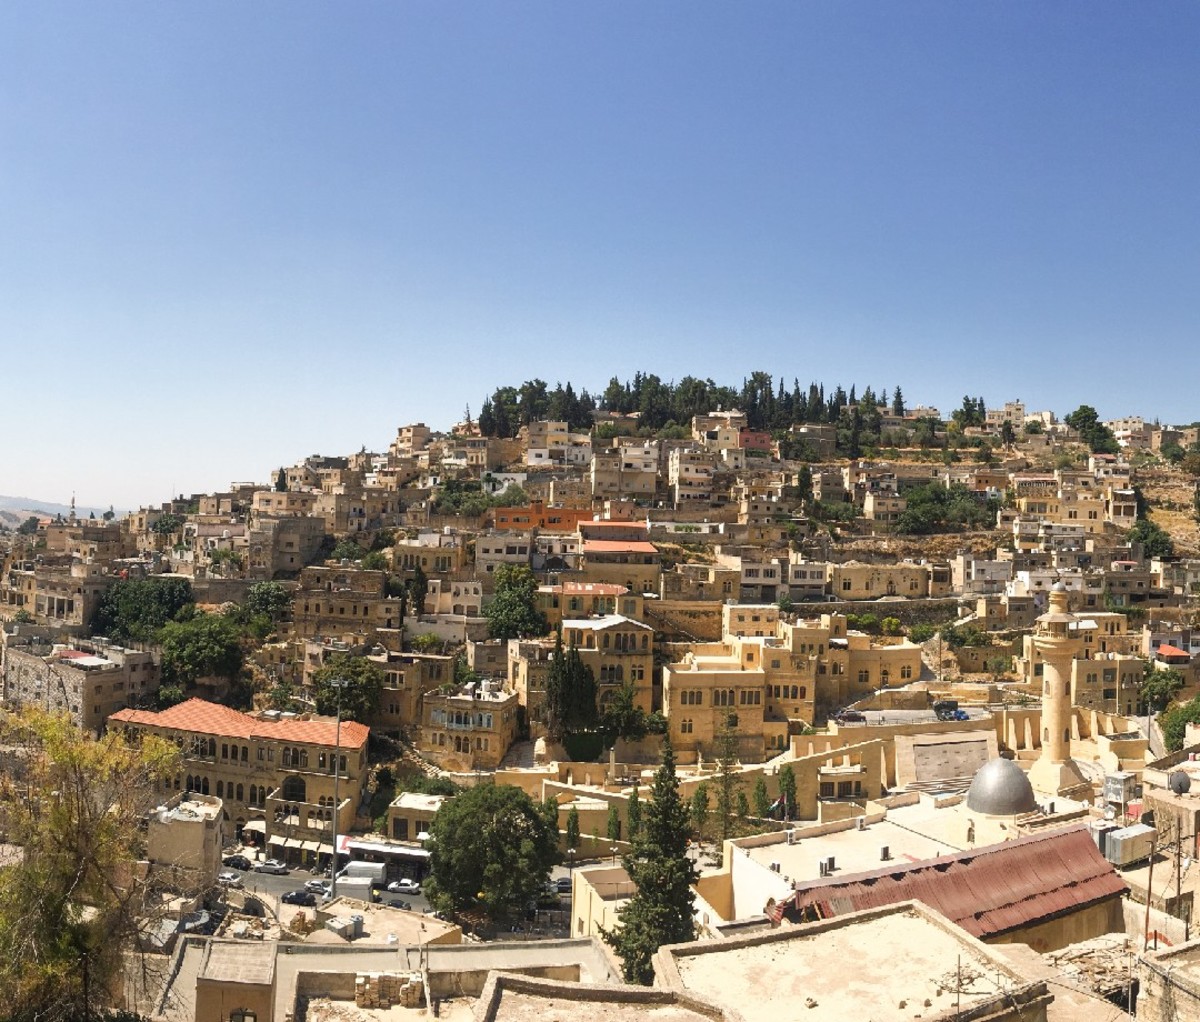 A view of the city of As-Salt in Jordan.